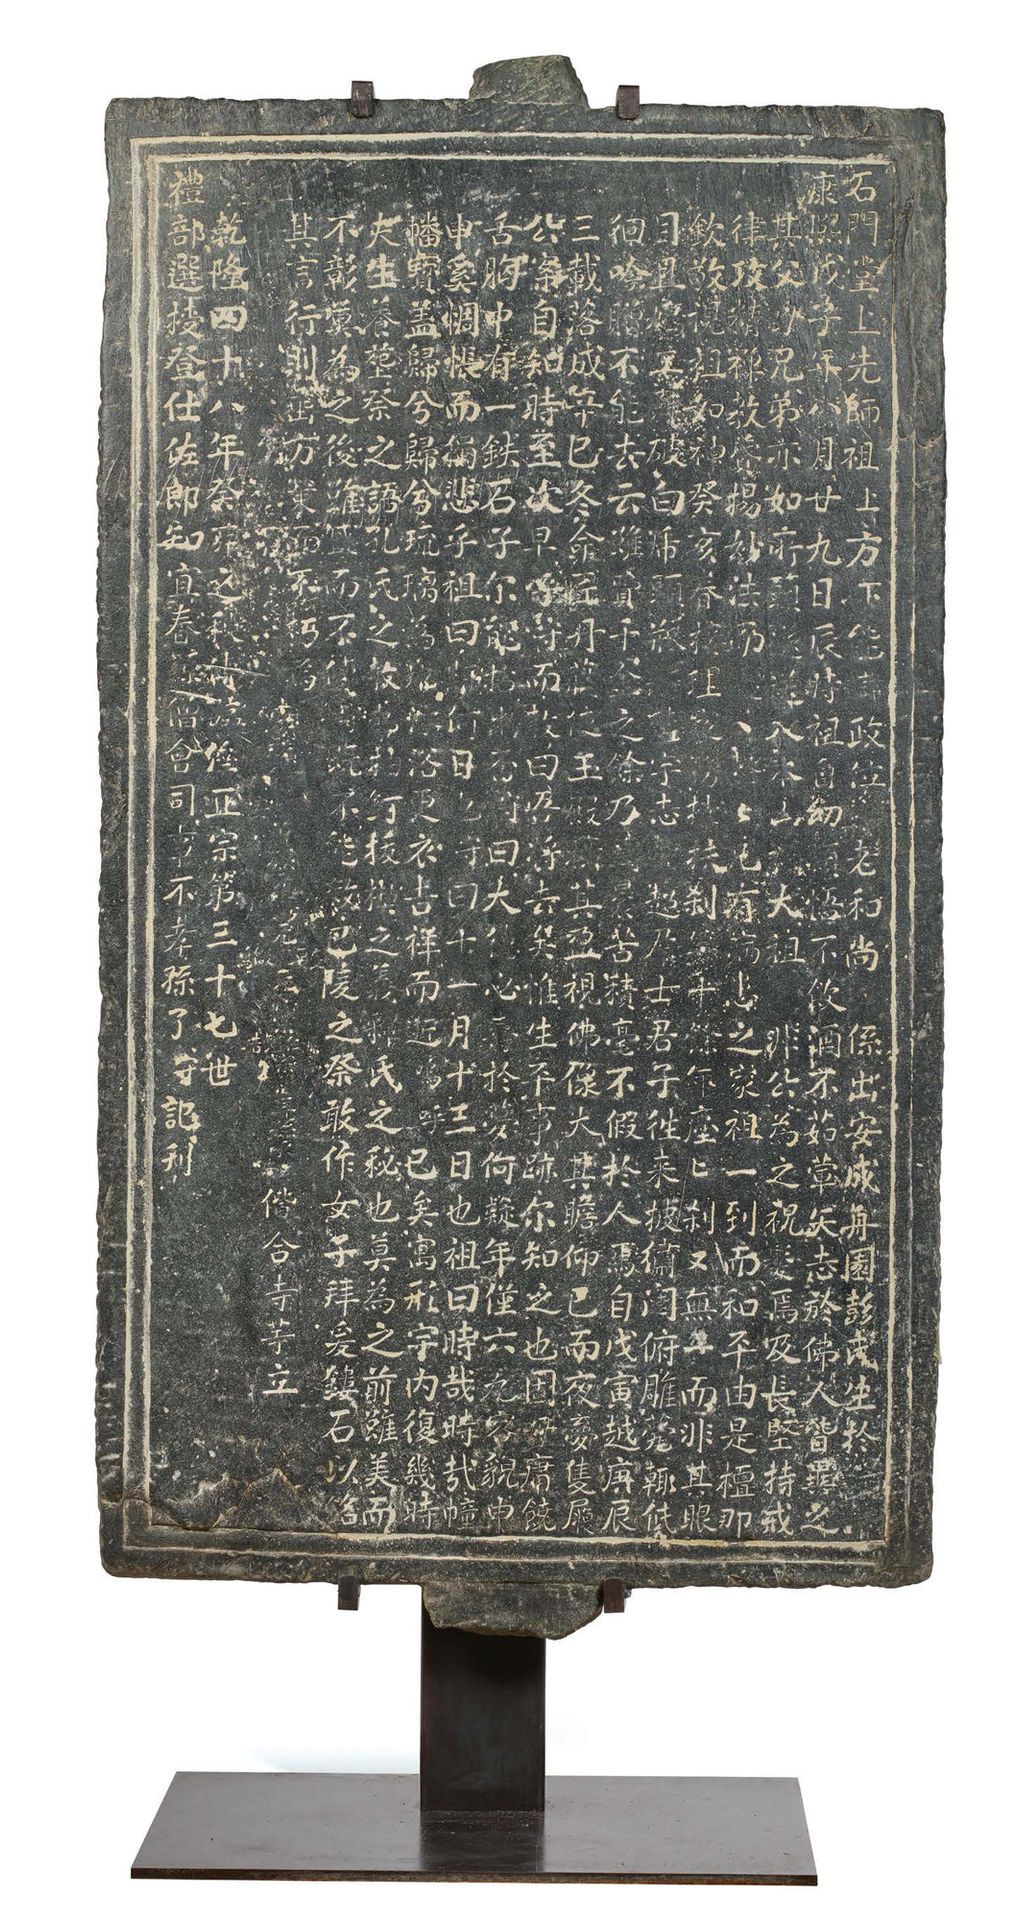 CHINE DYNASTIE QING (1644 - 1911) = 中国 清 (1644-1911)
大型隶书铭文灰色片岩石碑